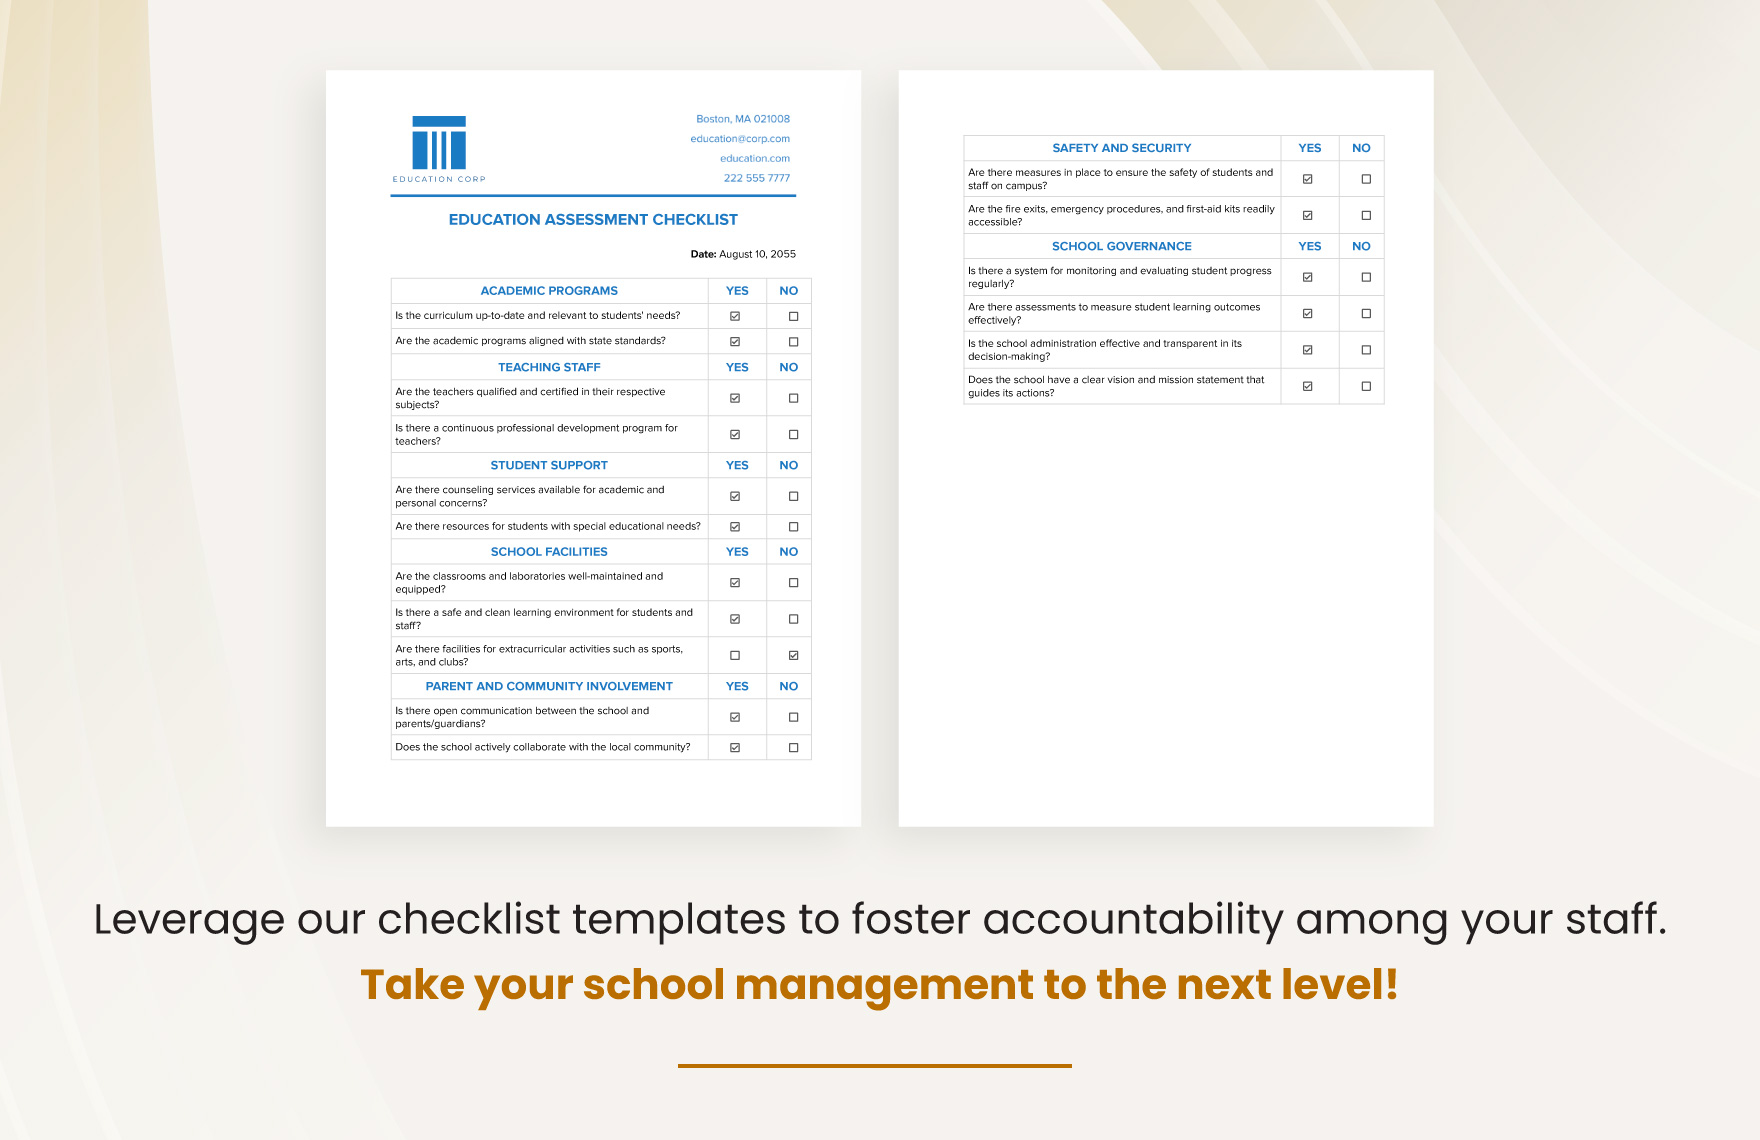 Education Assessment Checklist Template